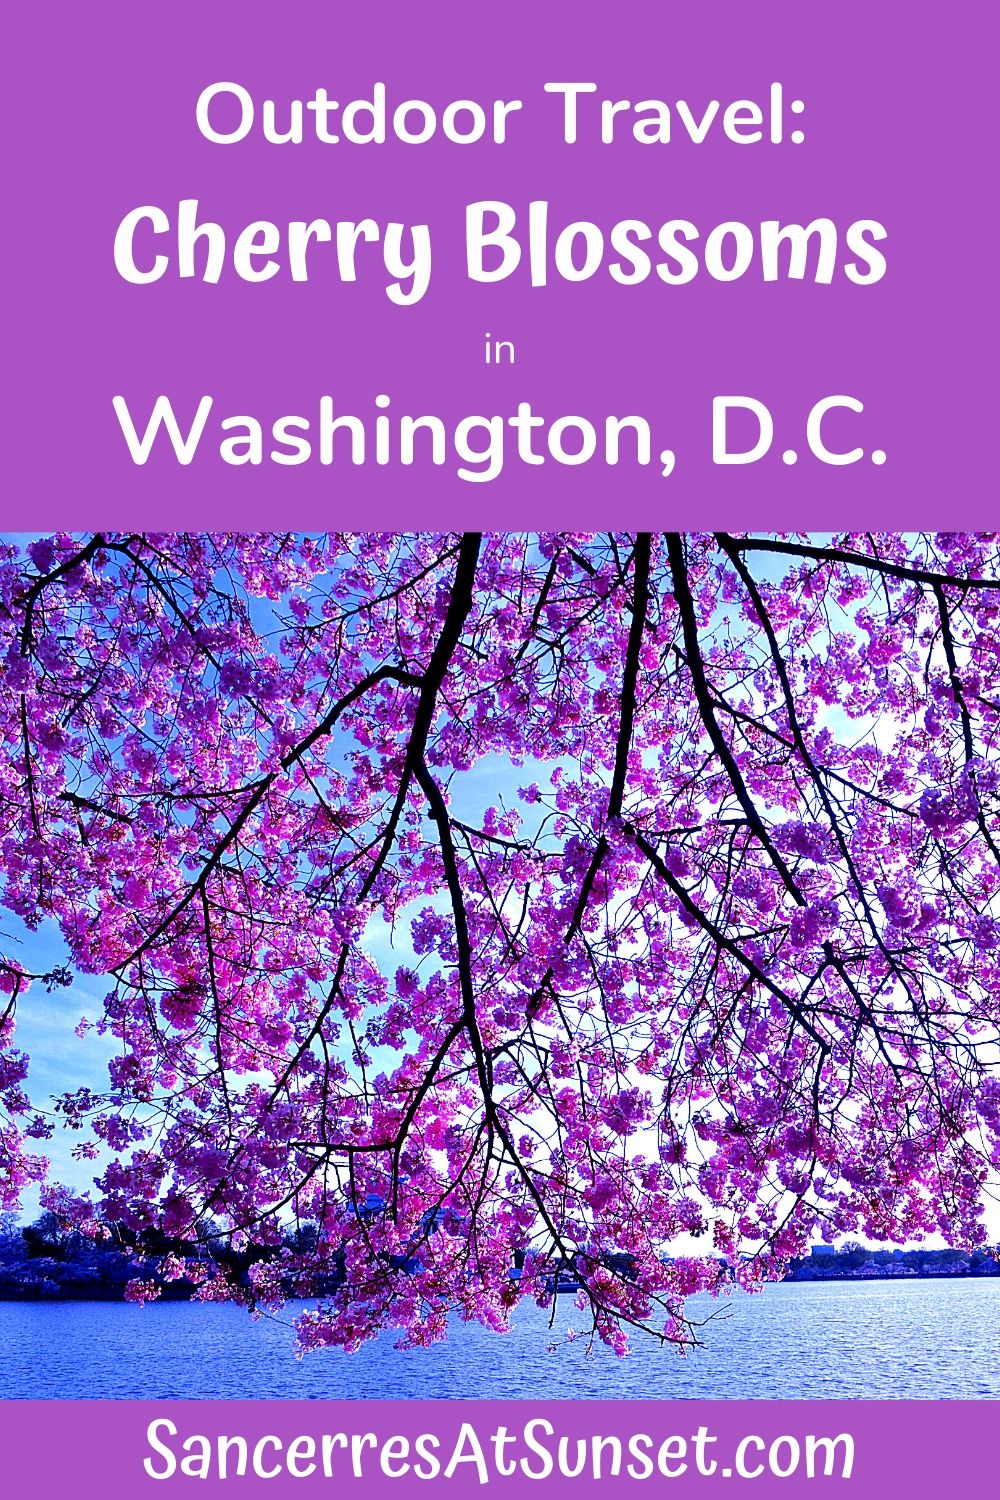 Cherry Blossoms Peak in Washington, D.C.!